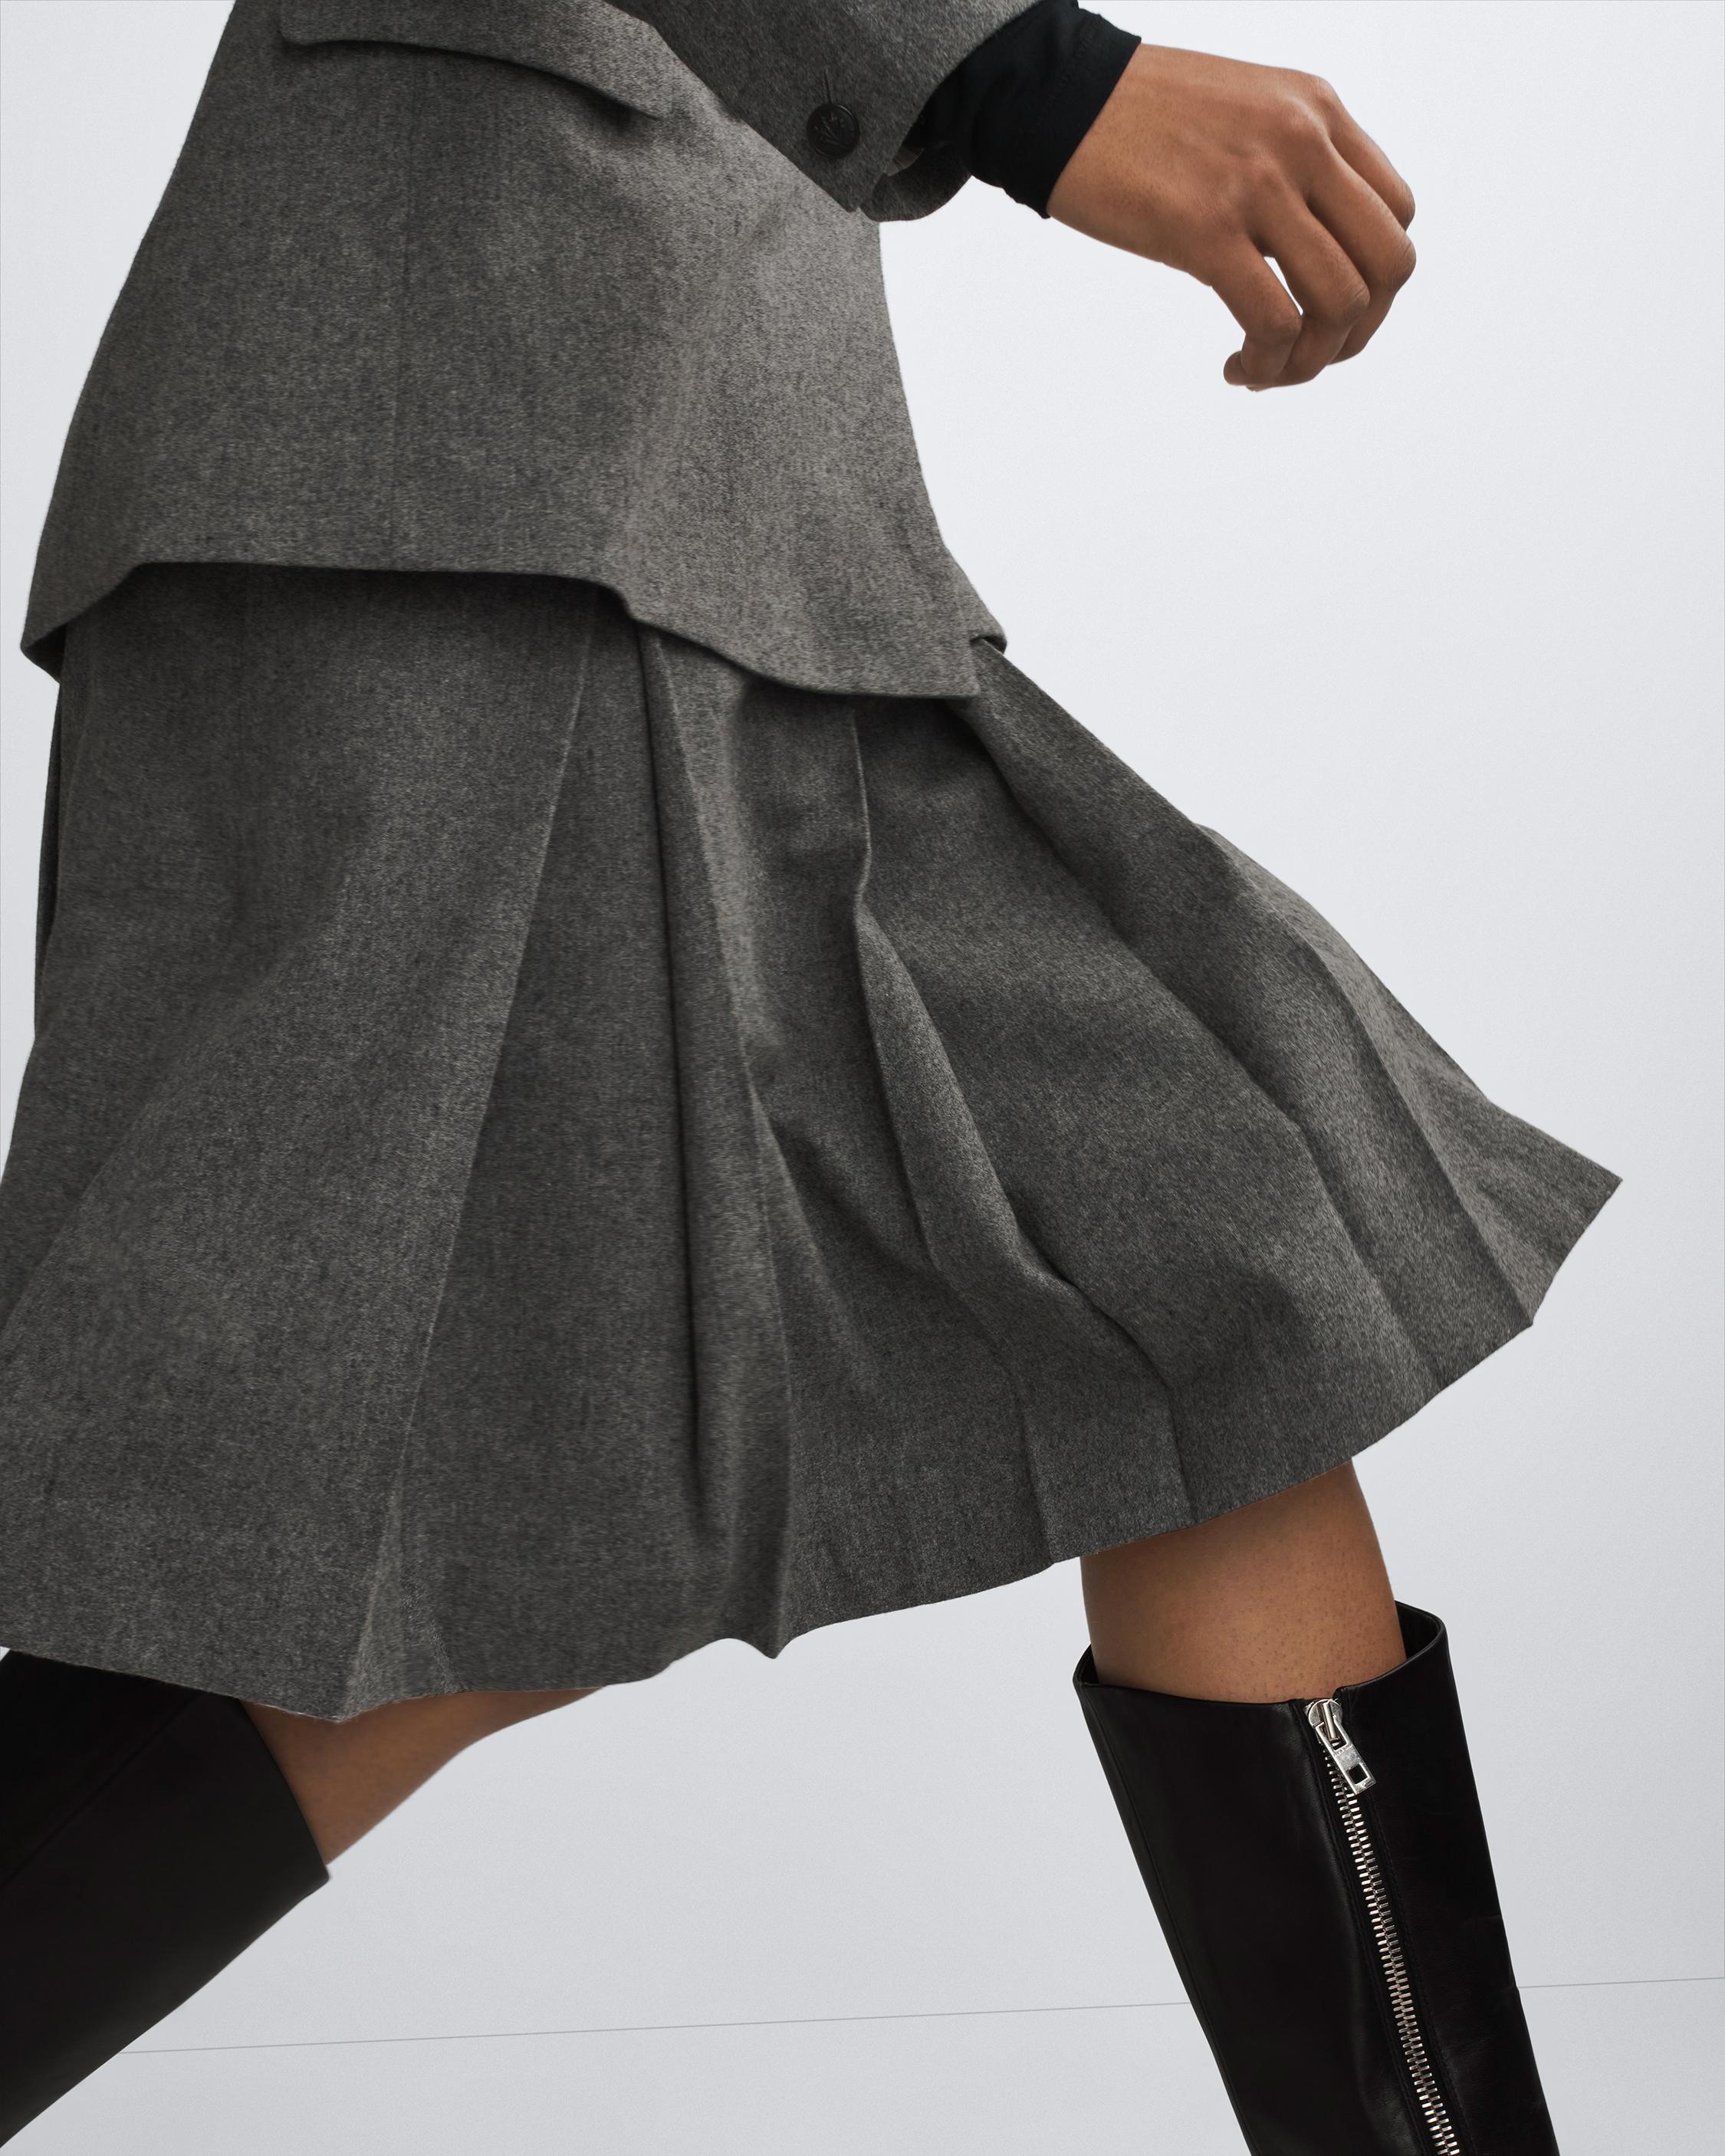 Garnet Italian Wool Skirt
Midi - 7